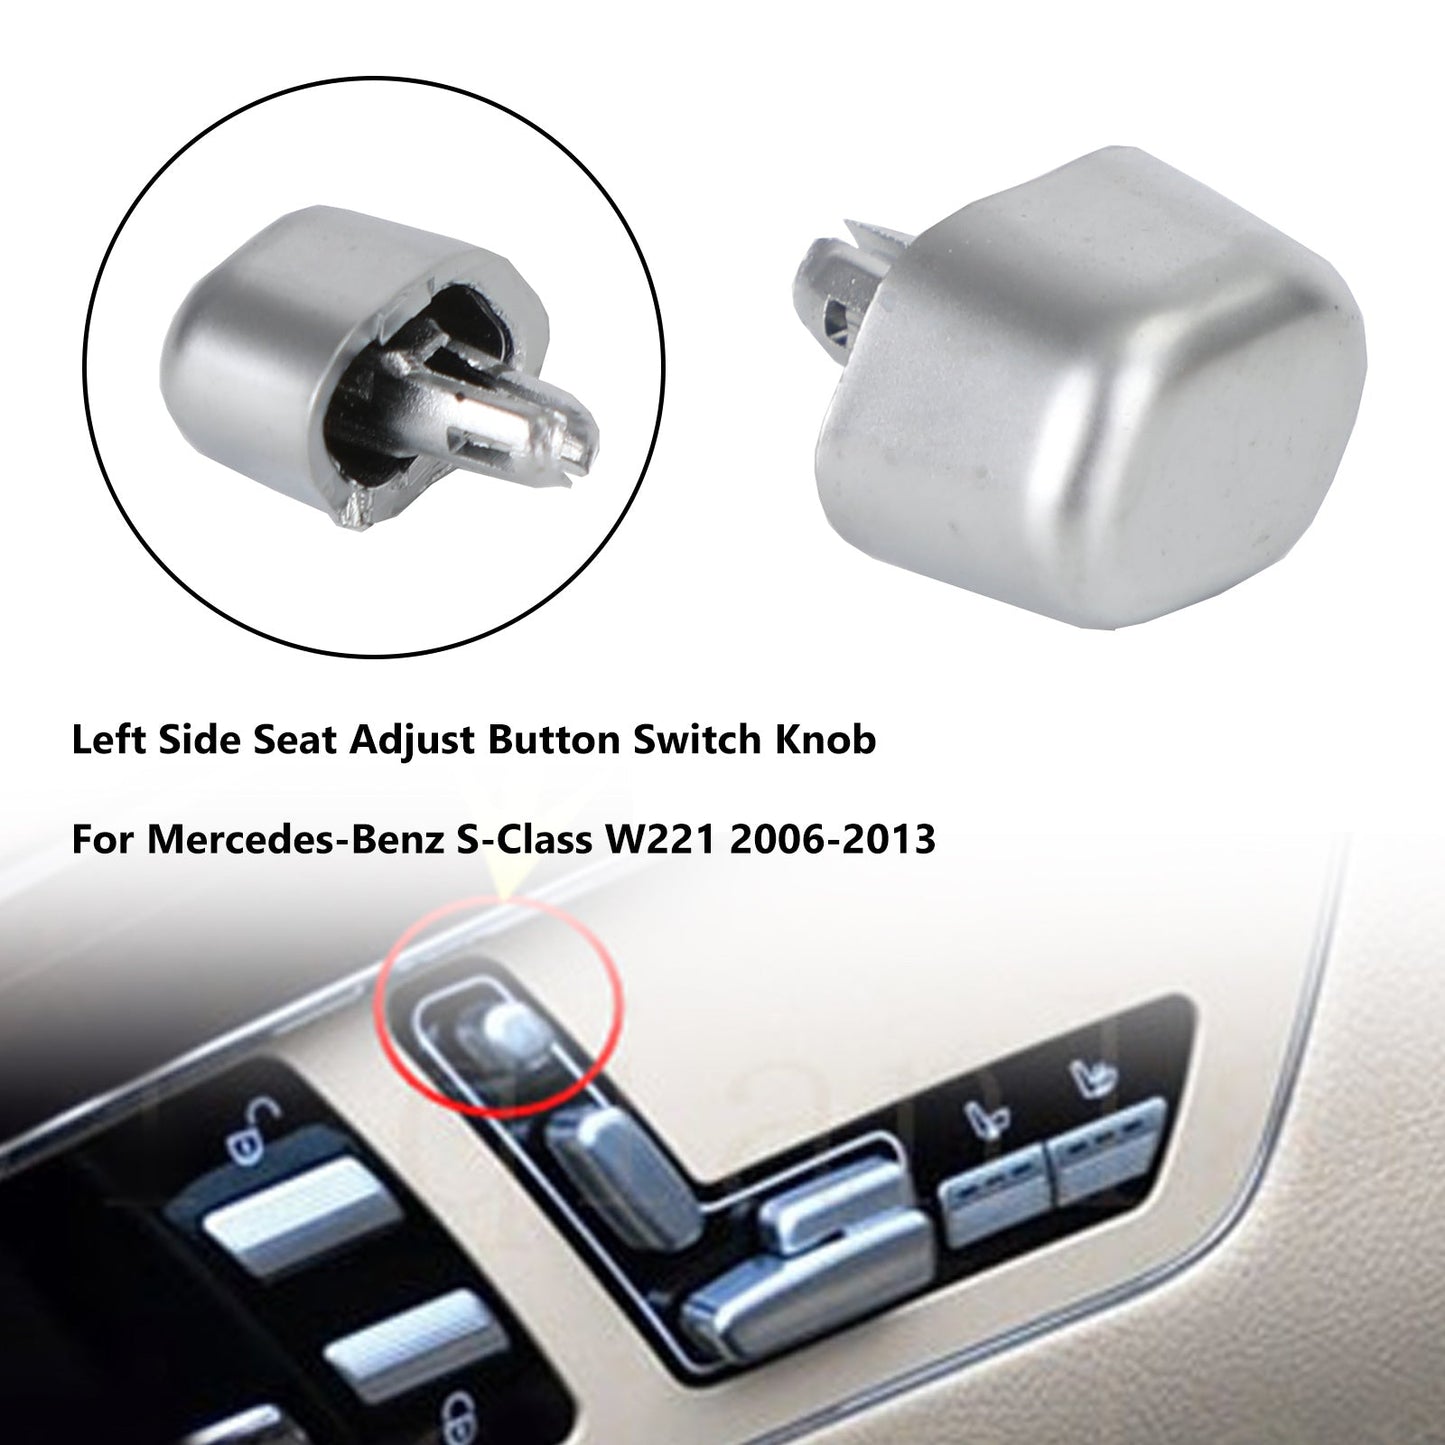 Left Seat Pillow Adjust Button Switch Knob For Mercedes Benz S-Class W221 06-13